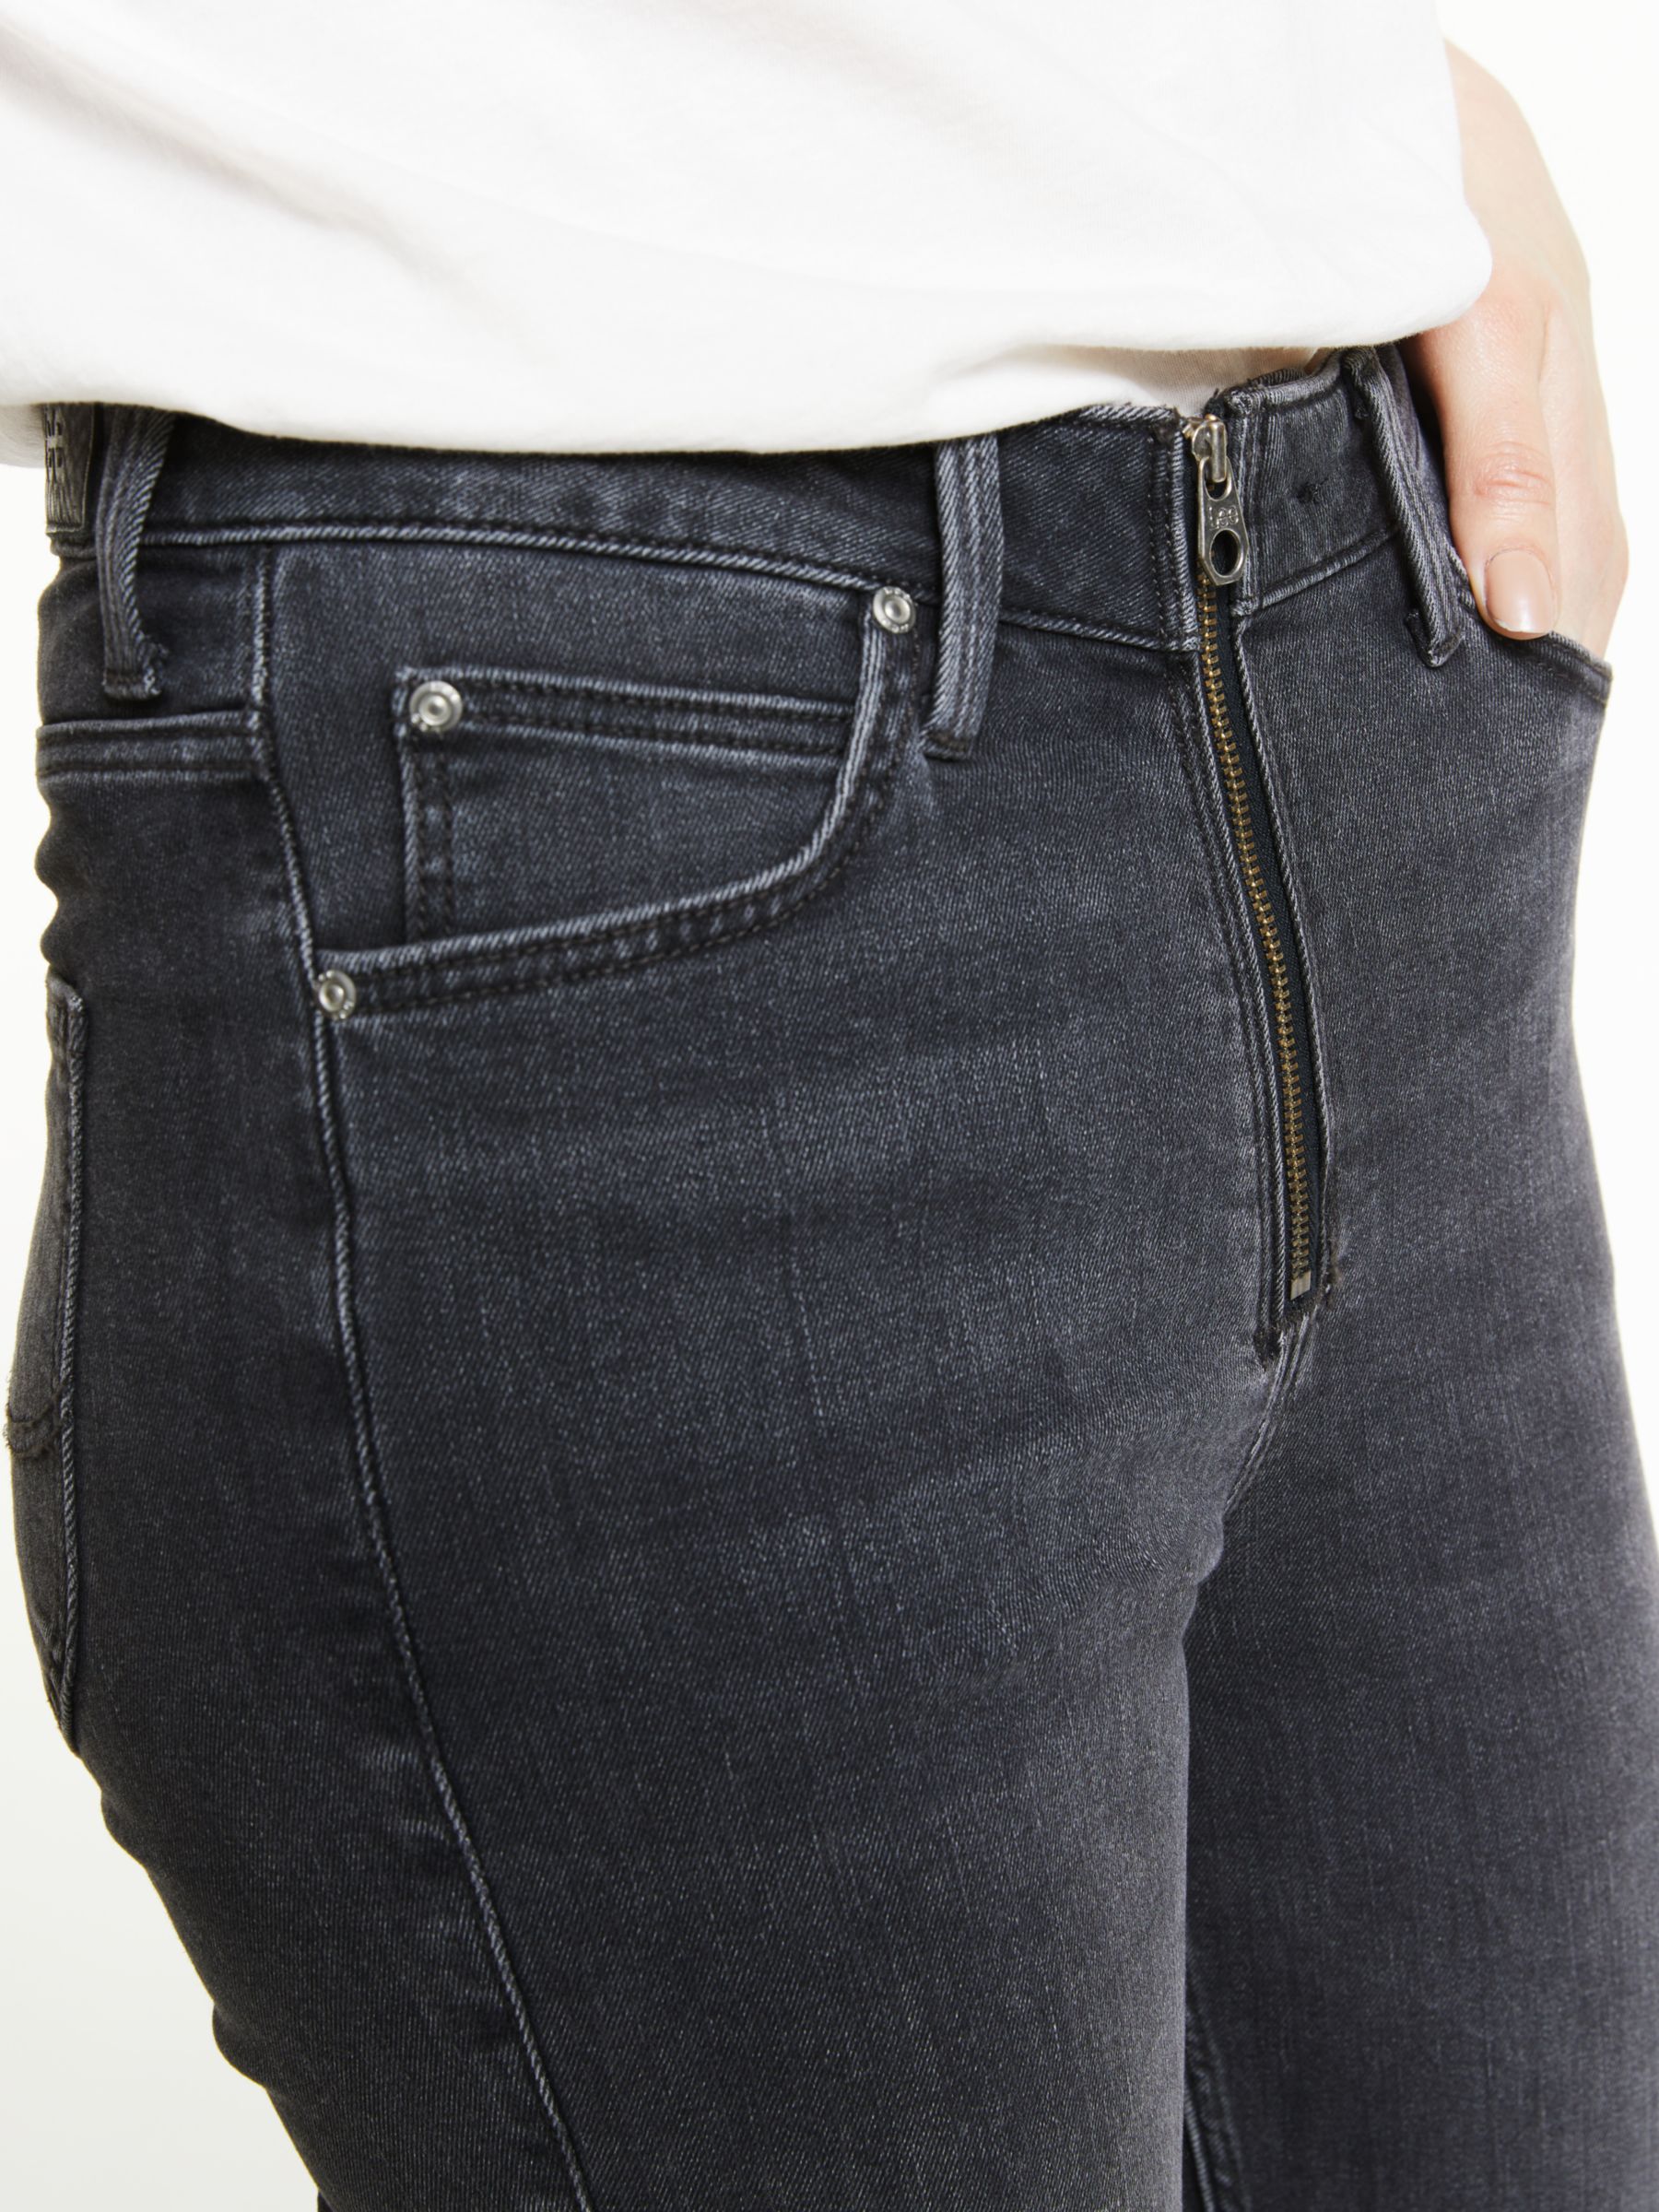 sss online shopping jeans